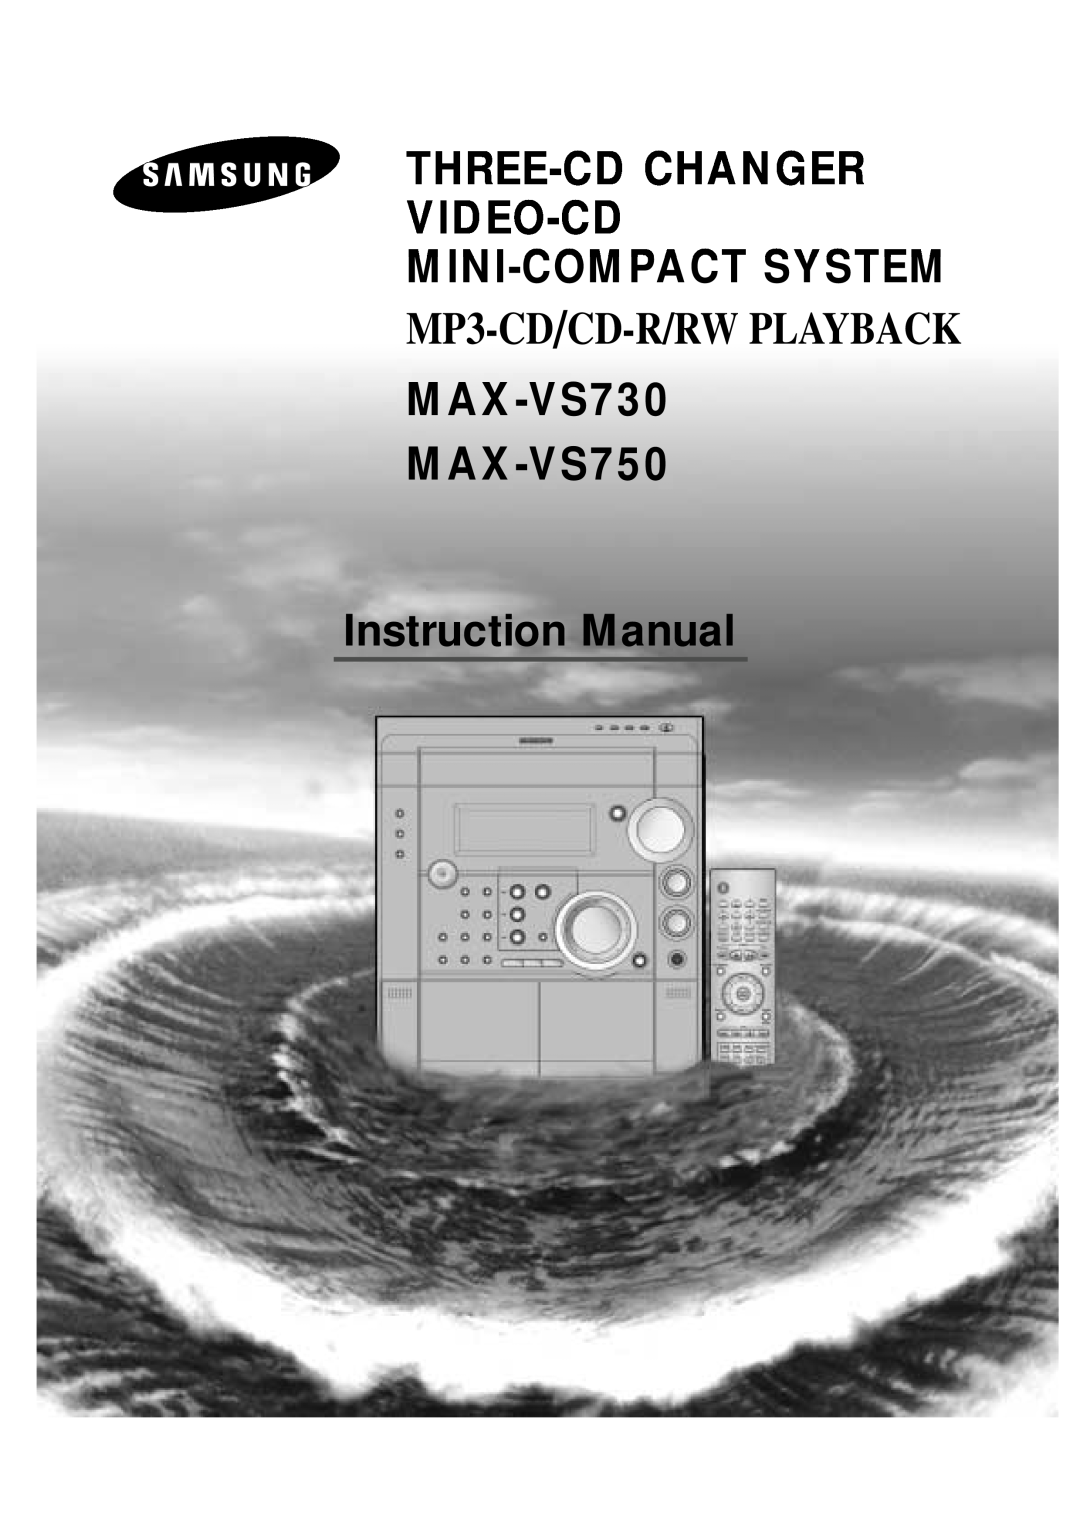 Samsung MAX-VS750, MAX-VS730 instruction manual Three-Cdchanger Video-Cd Mini-Compactsystem, MP3-CD/CD-R/RWPLAYBACK 